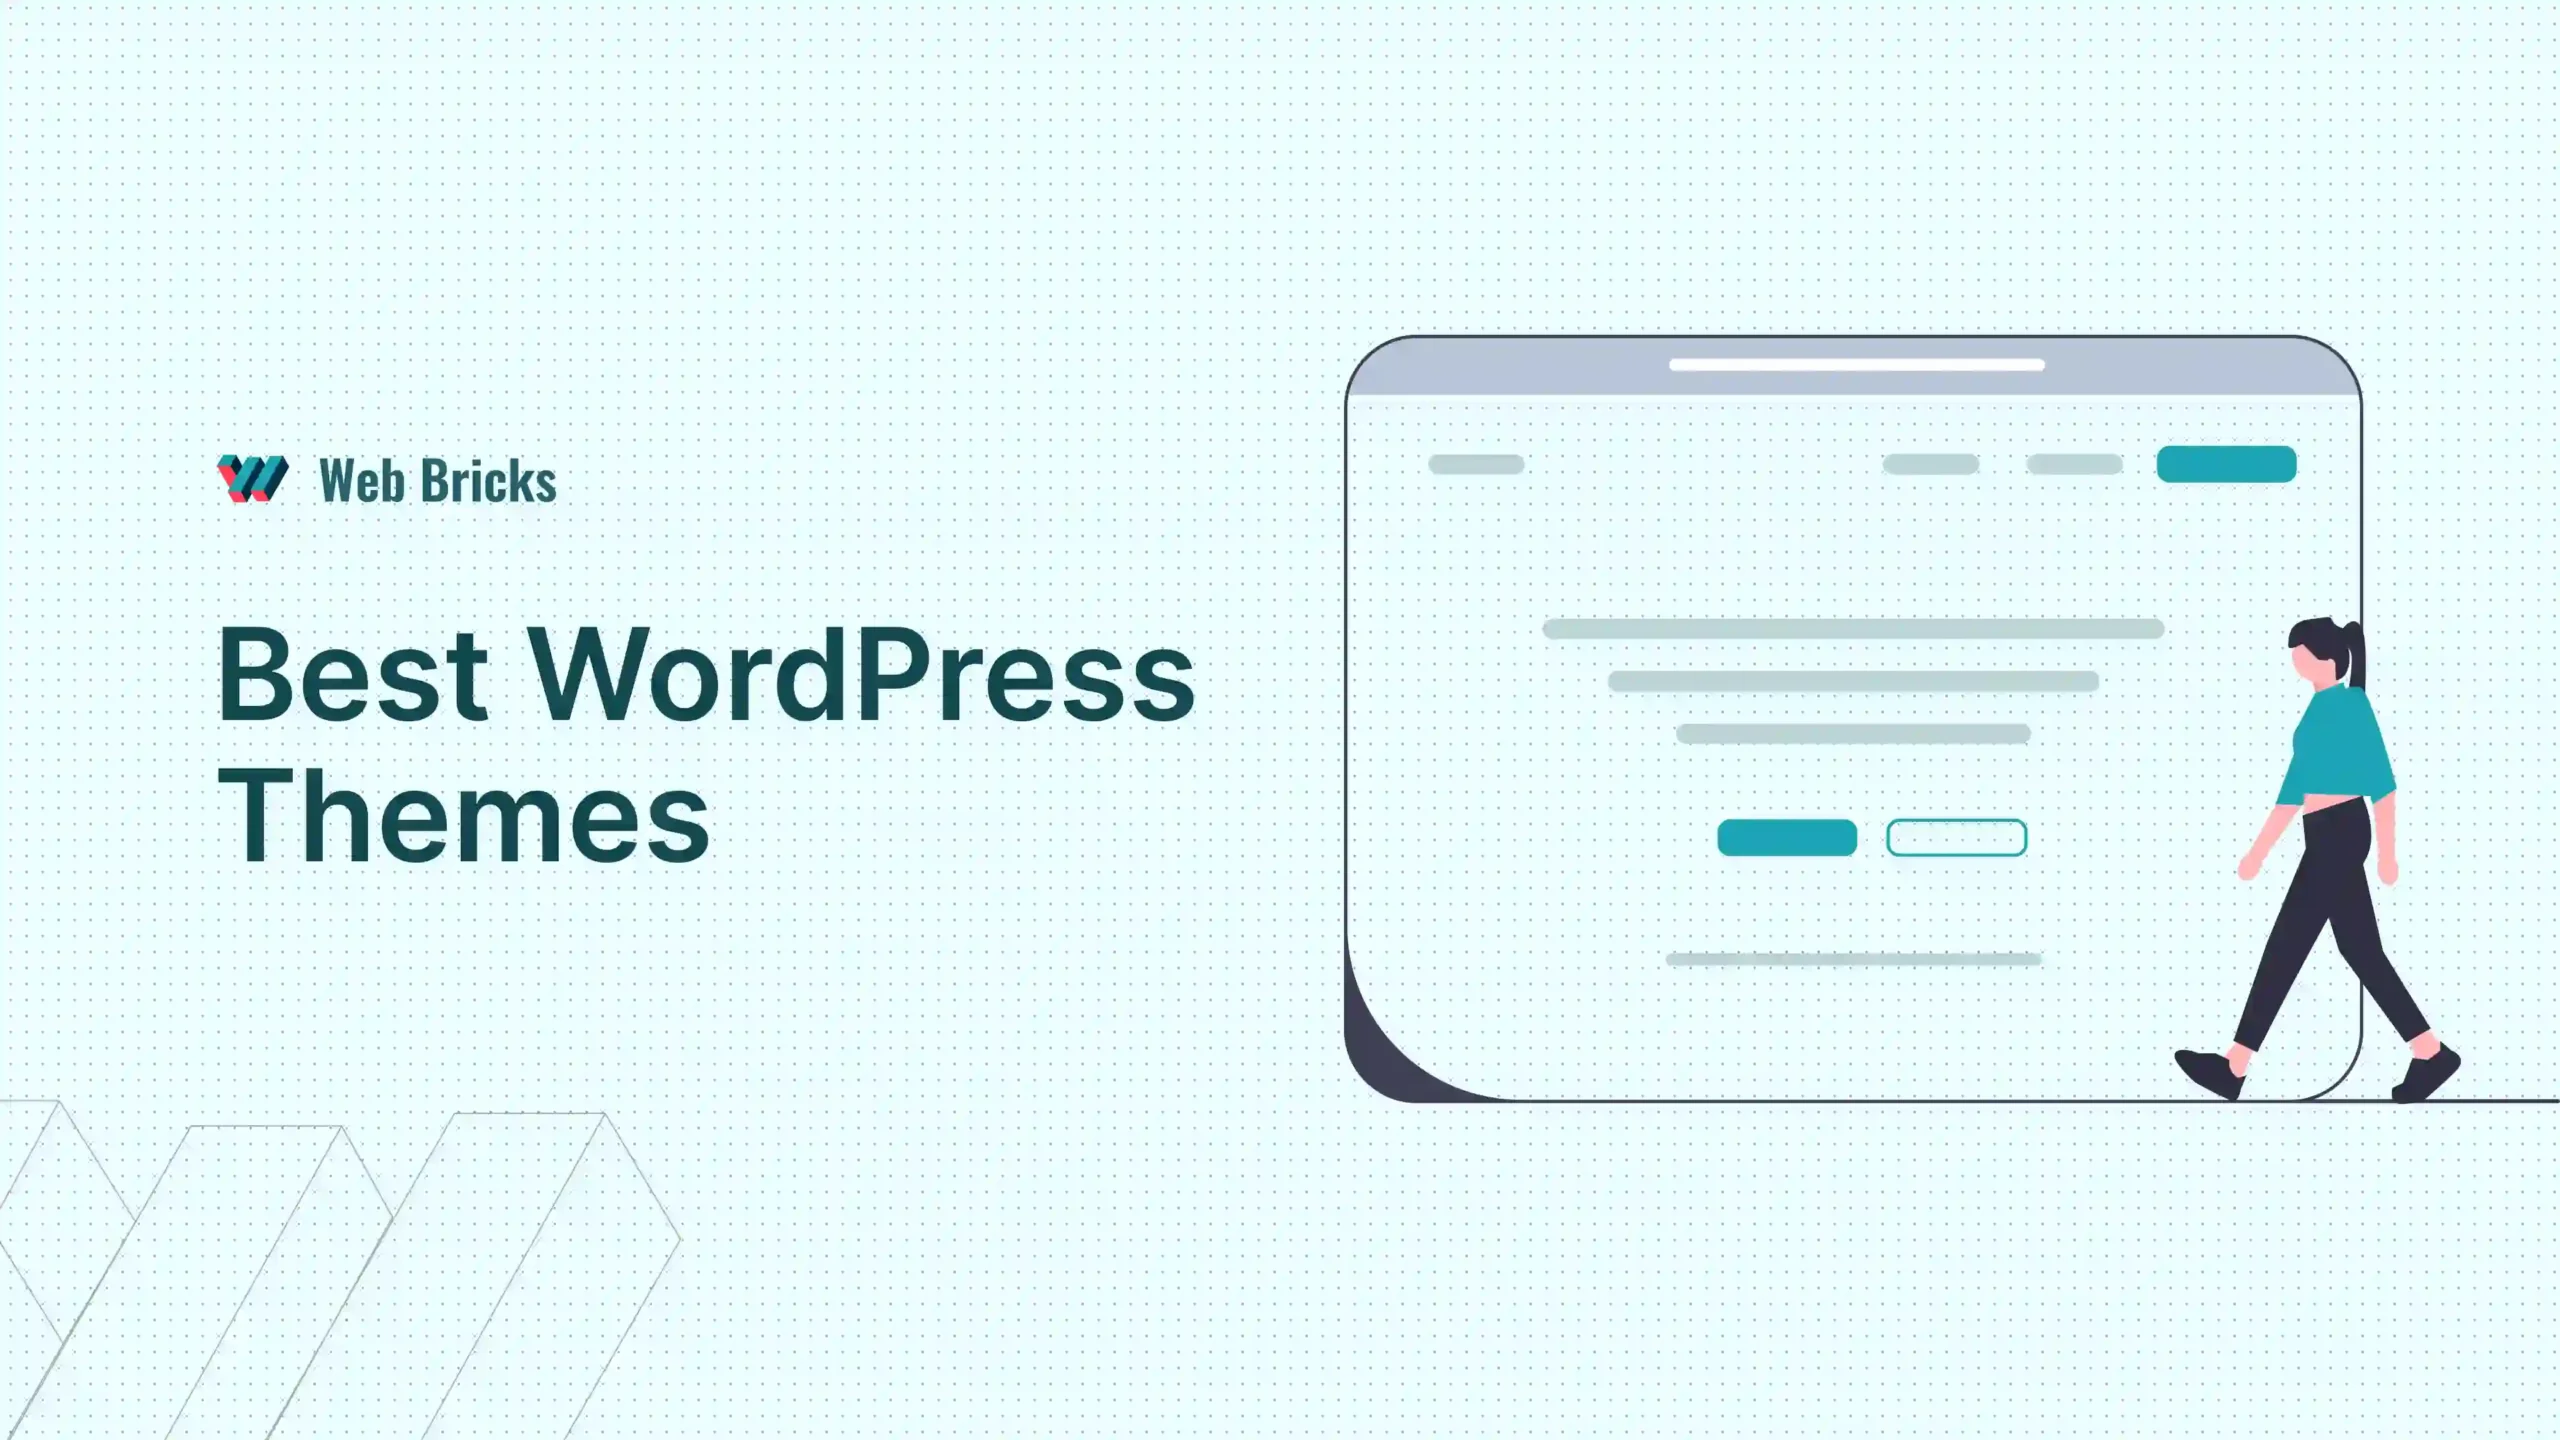 Best WordPress Themes - Web Bricks